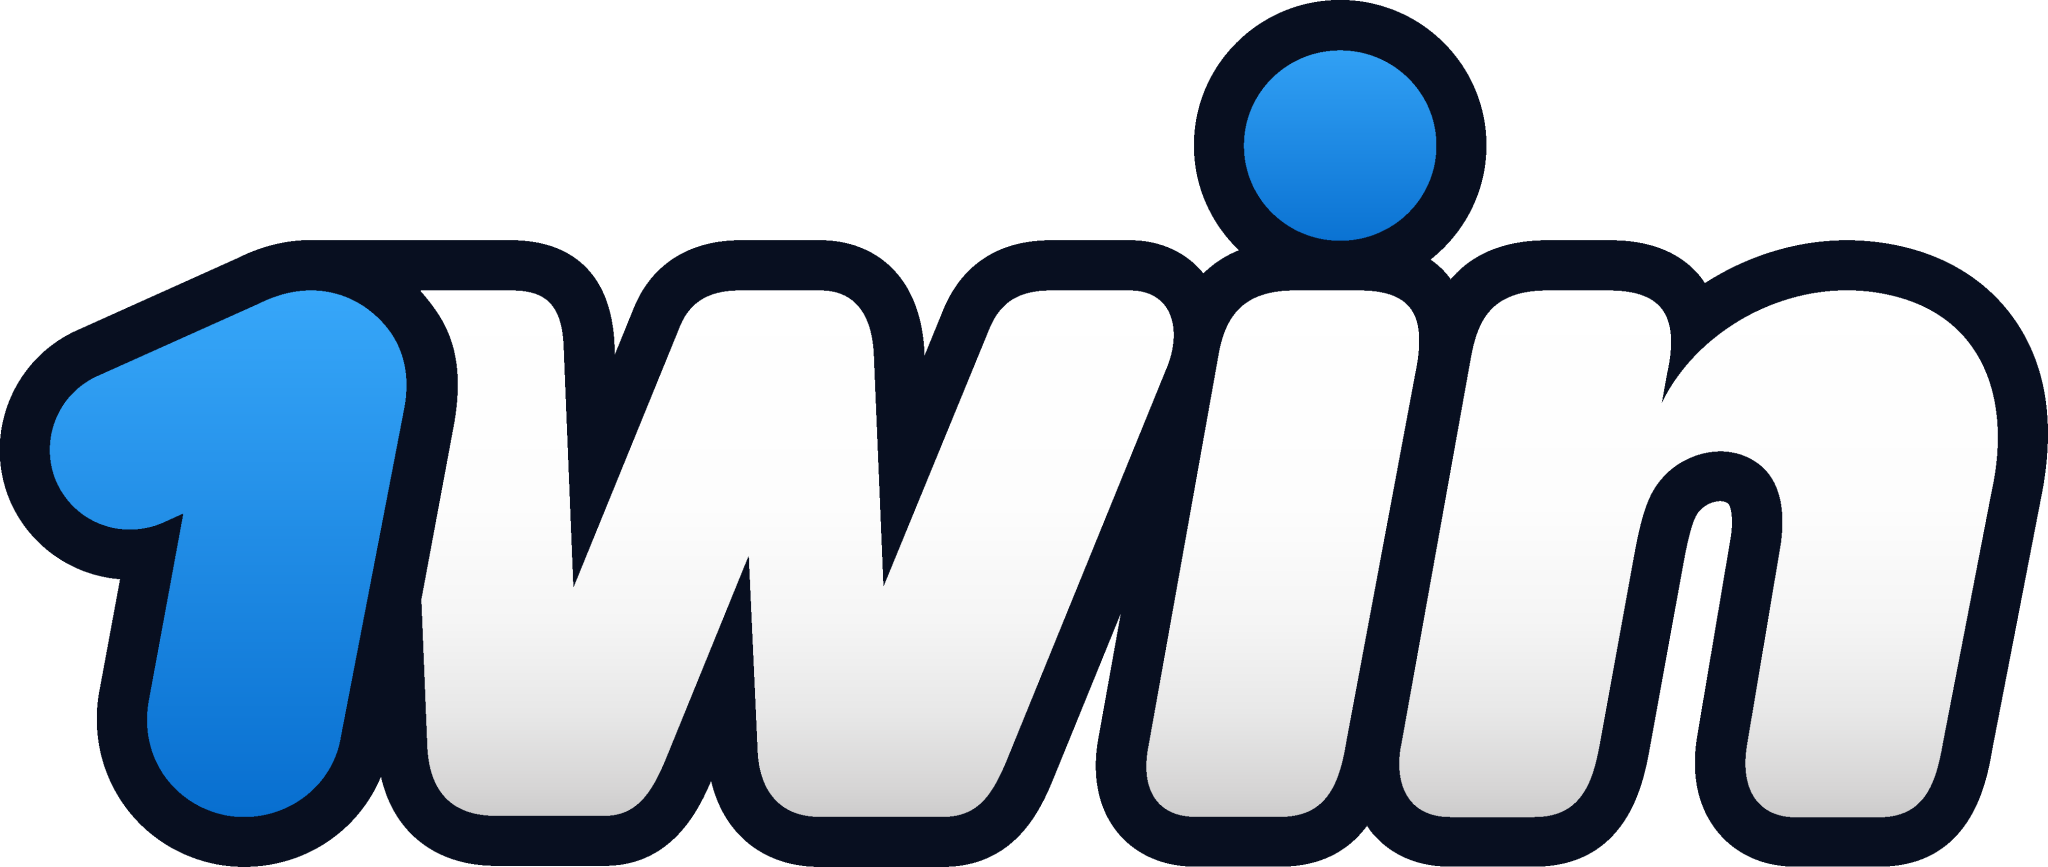 1win. 1win аватарка. 1 Вин логотип. 1win надпись.